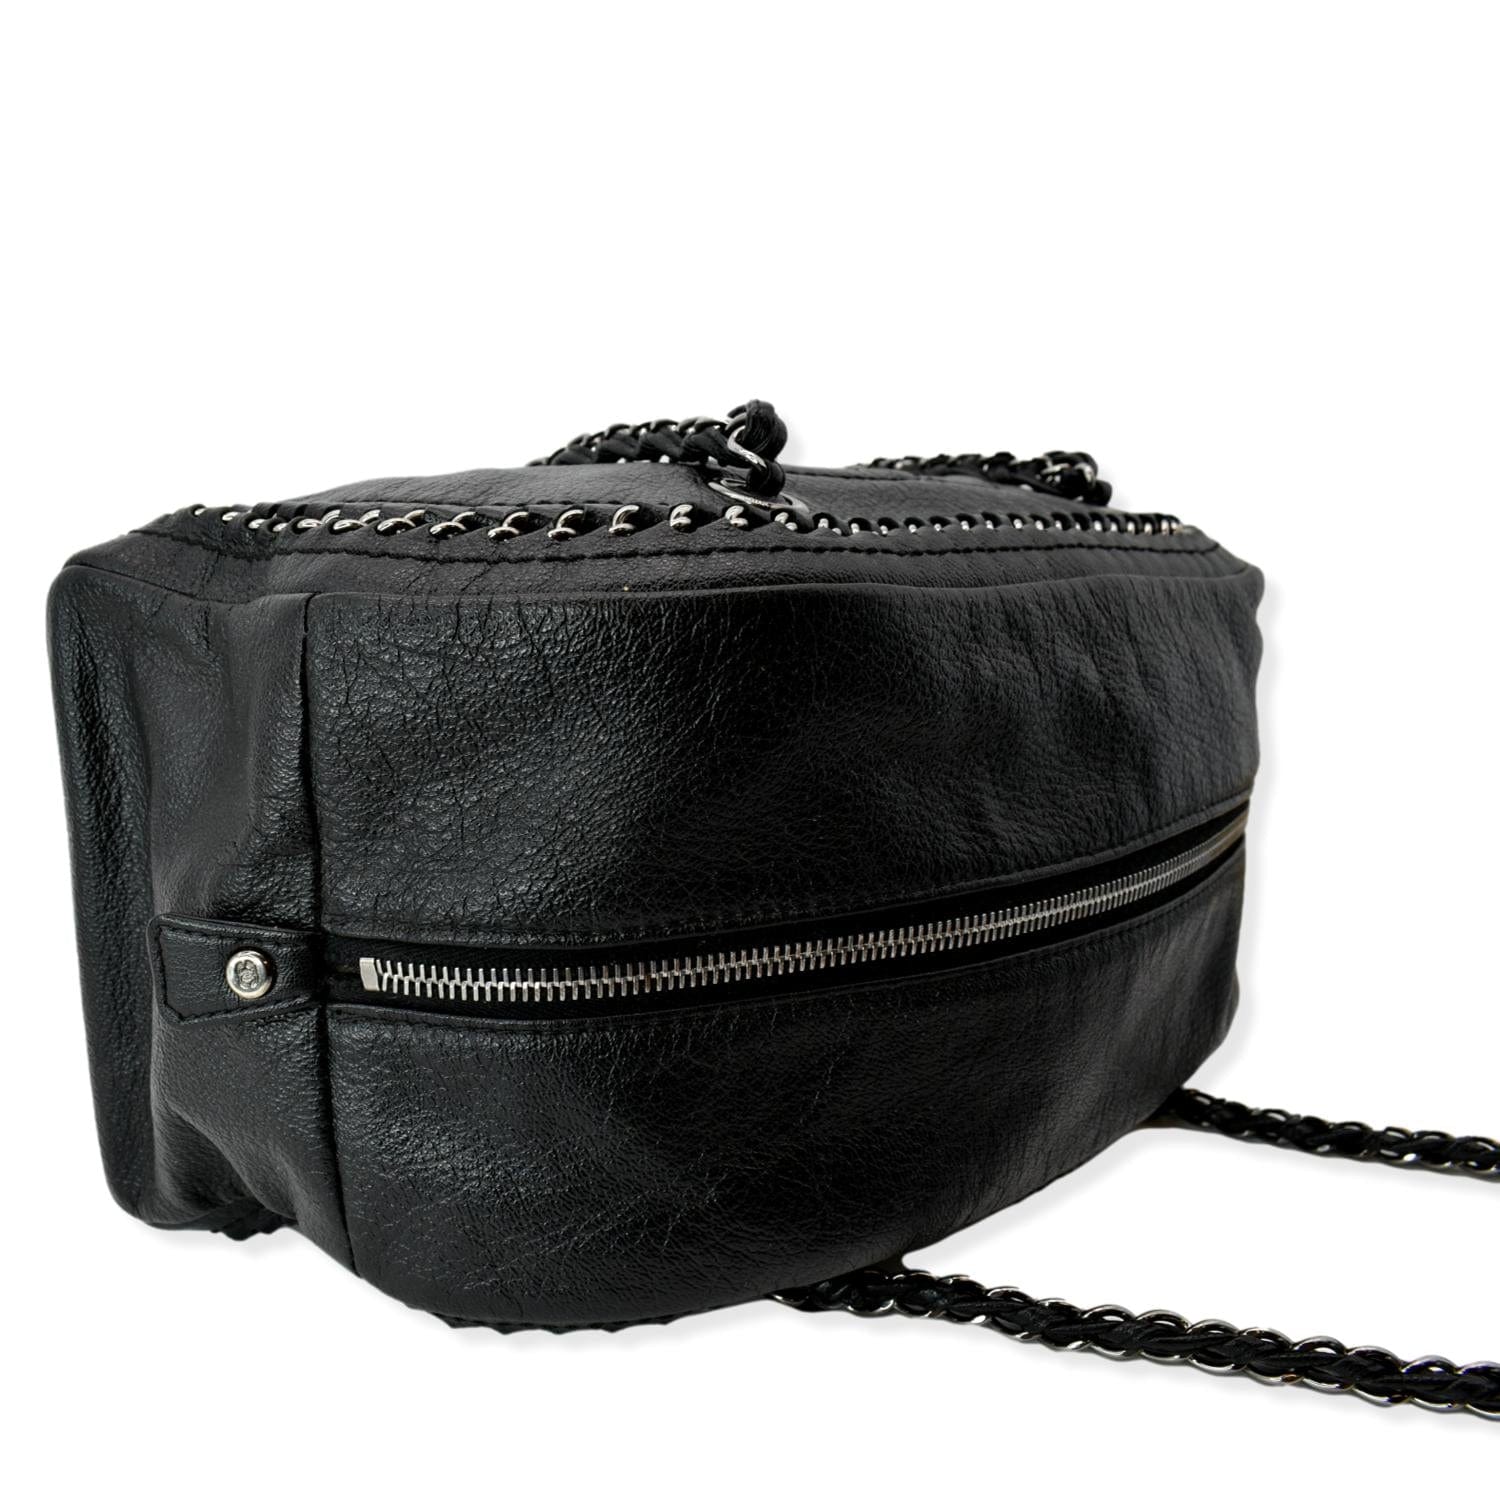 Replica Chanel Small Bowling Bag in Calfskin AS1321 Black